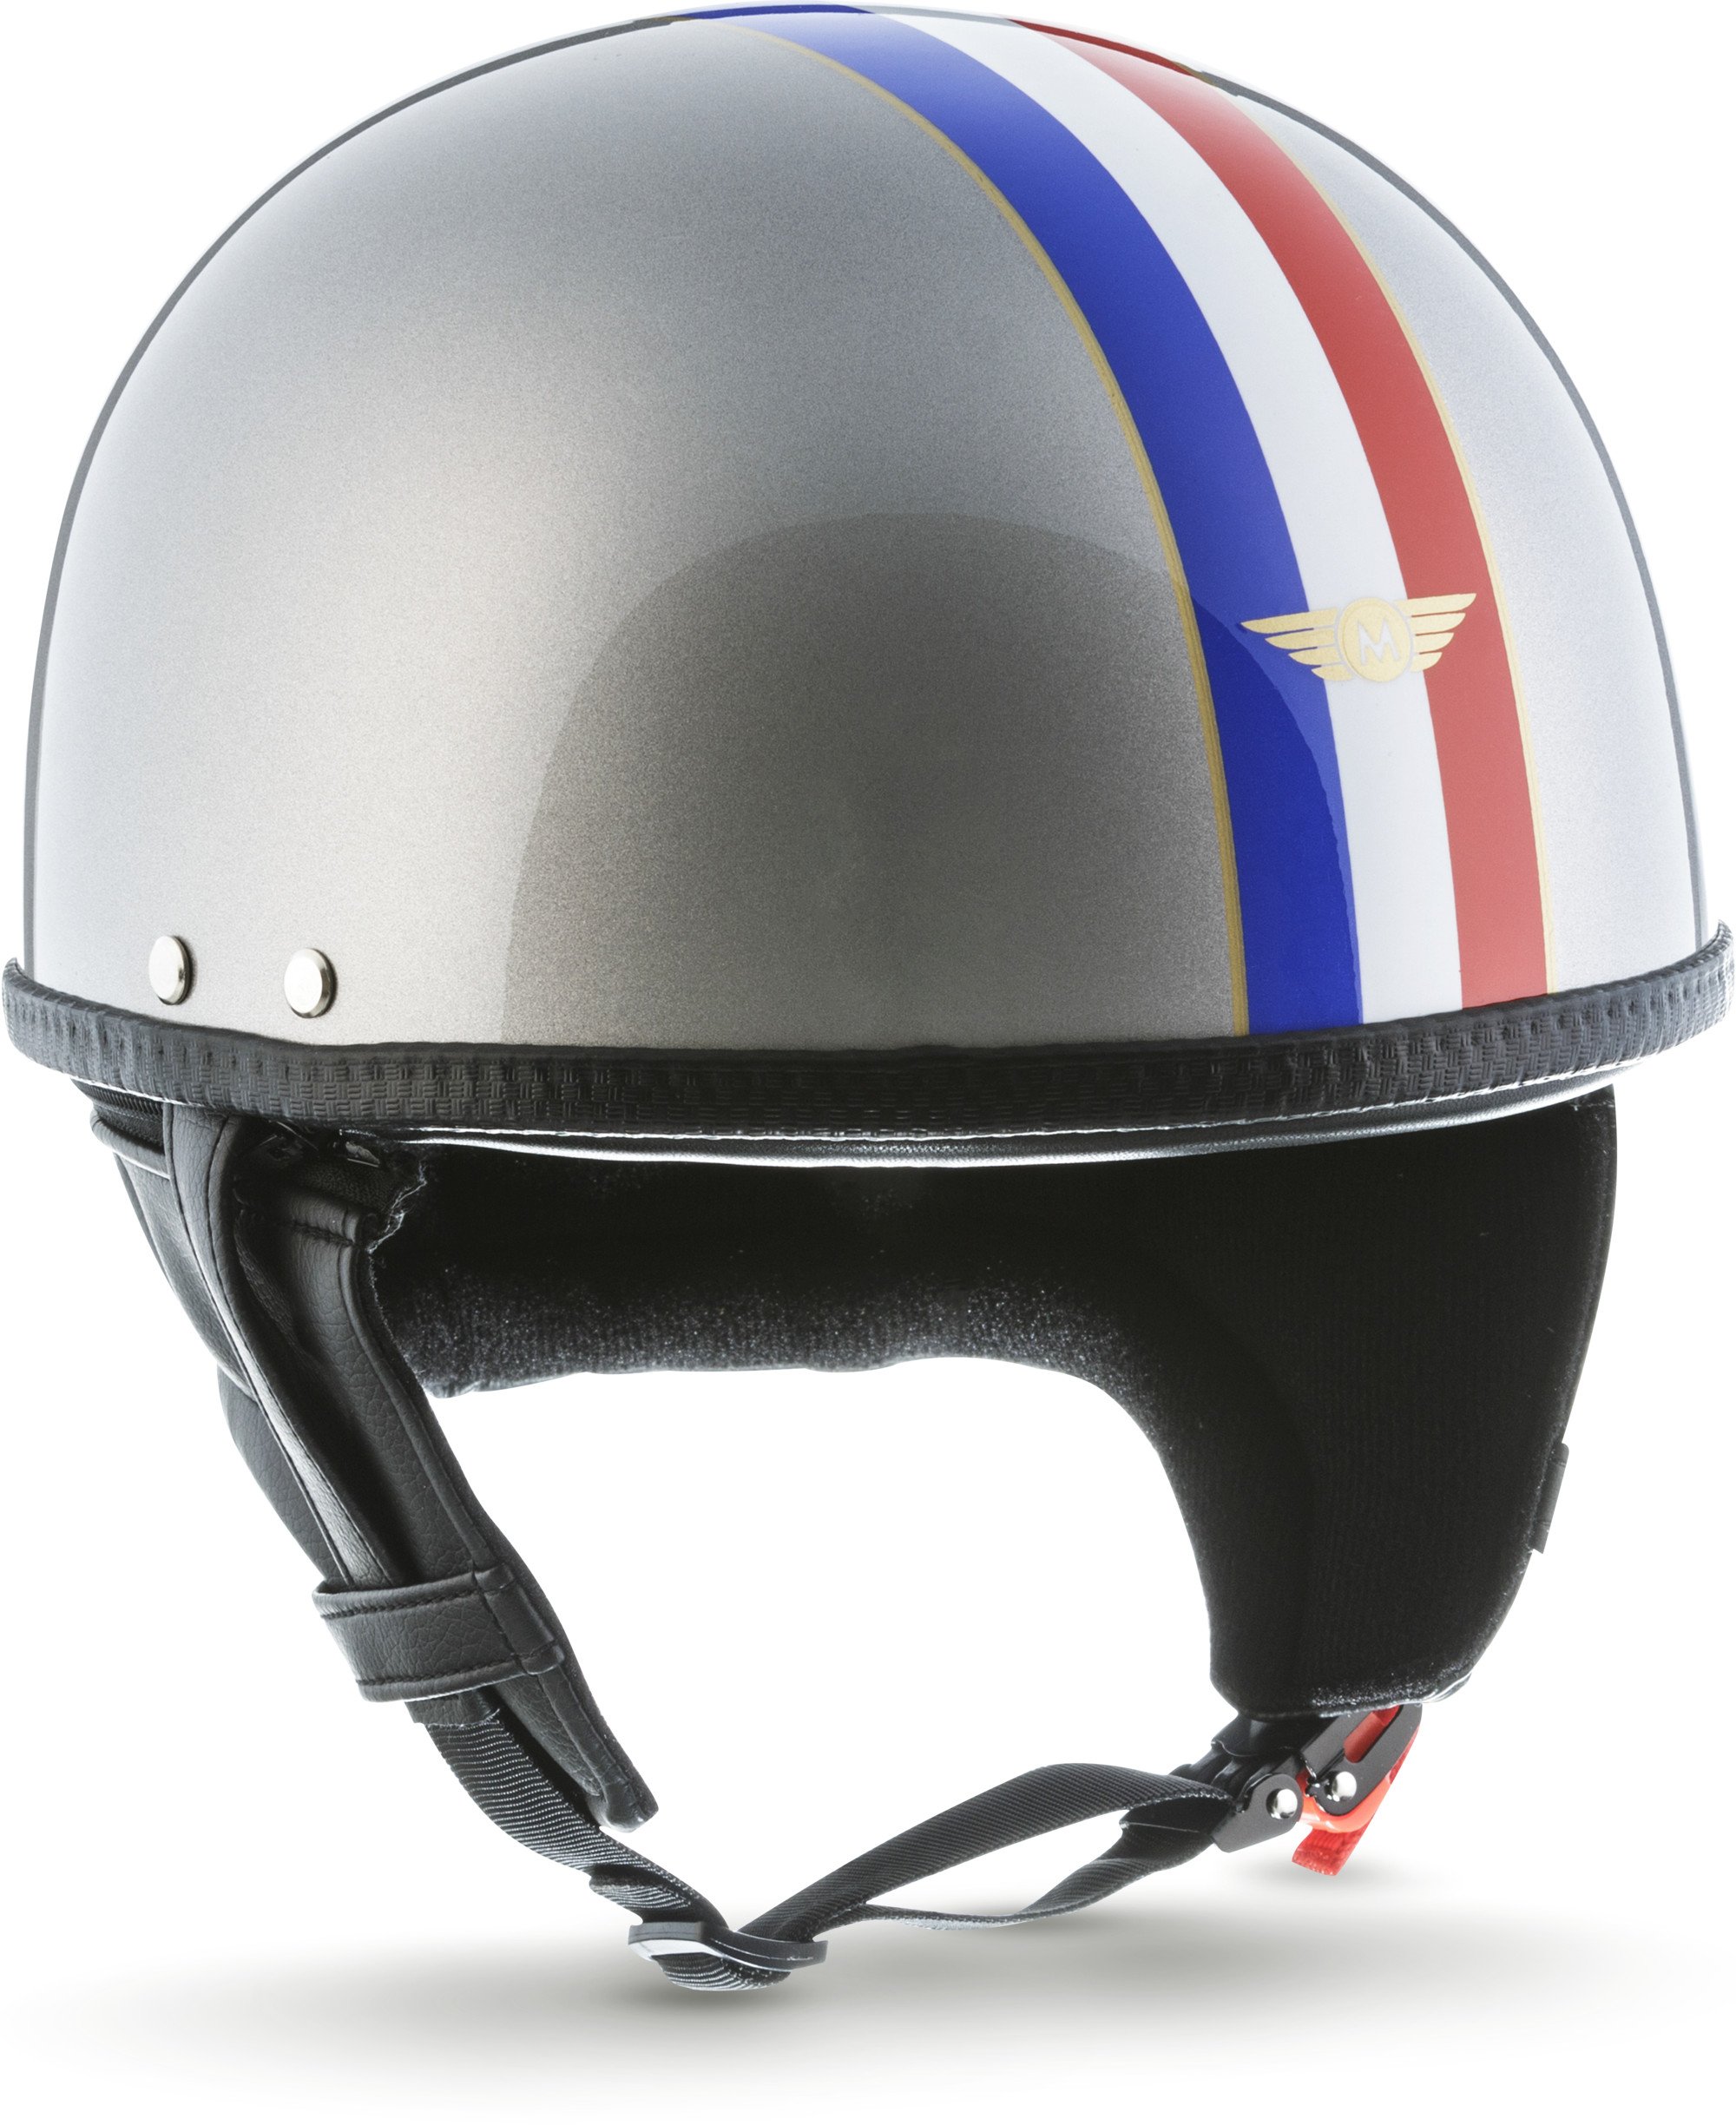 Moto Helmets® D22 „France Titan“ · Brain-Cap · Halbschale Jet-Helm Motorrad-Helm Bobber · Fiberglas Schnellverschluss SlimShell Tasche M (57-58cm)